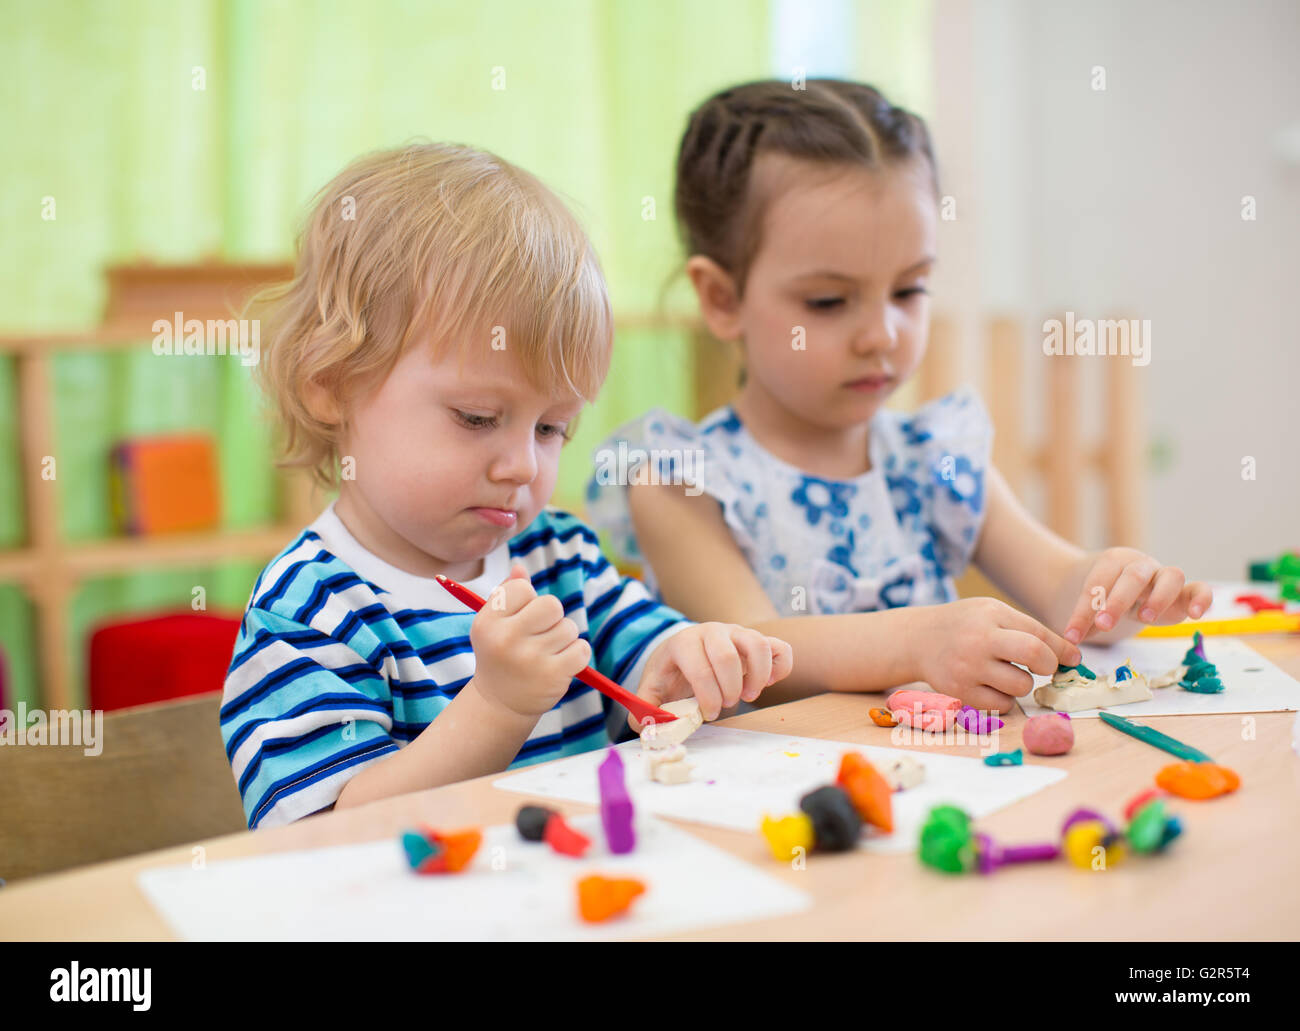 Kids or children creating arts and crafts in kindergarten Stock Photo